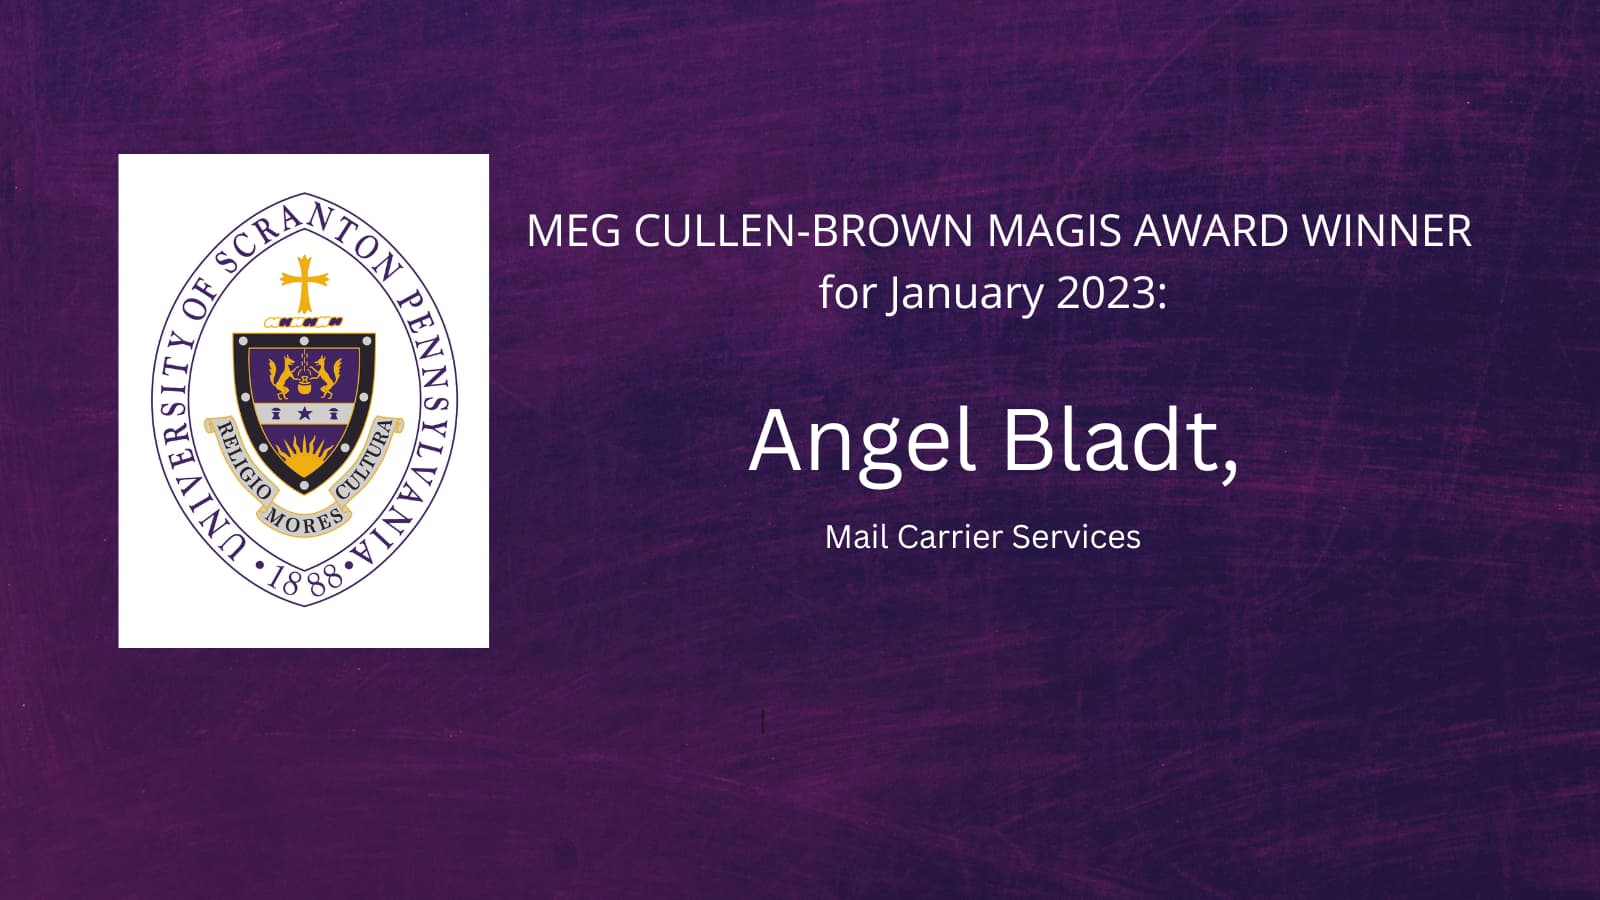 Angel Bladt is Meg Cullen-Brown Magis Award Winner image